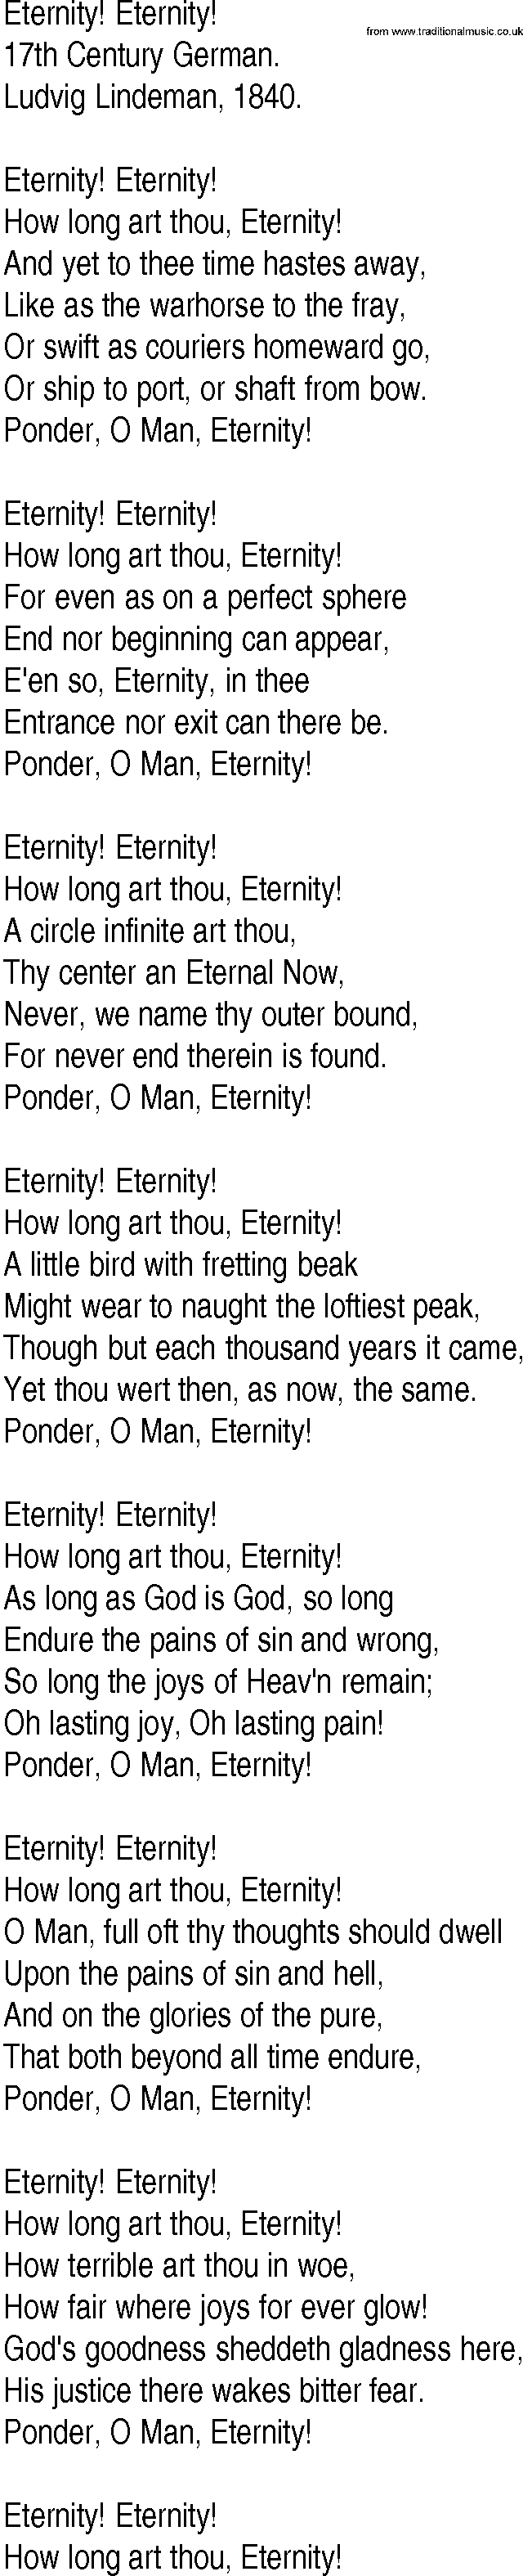 Hymn and Gospel Song: Eternity! Eternity! by th Century German lyrics